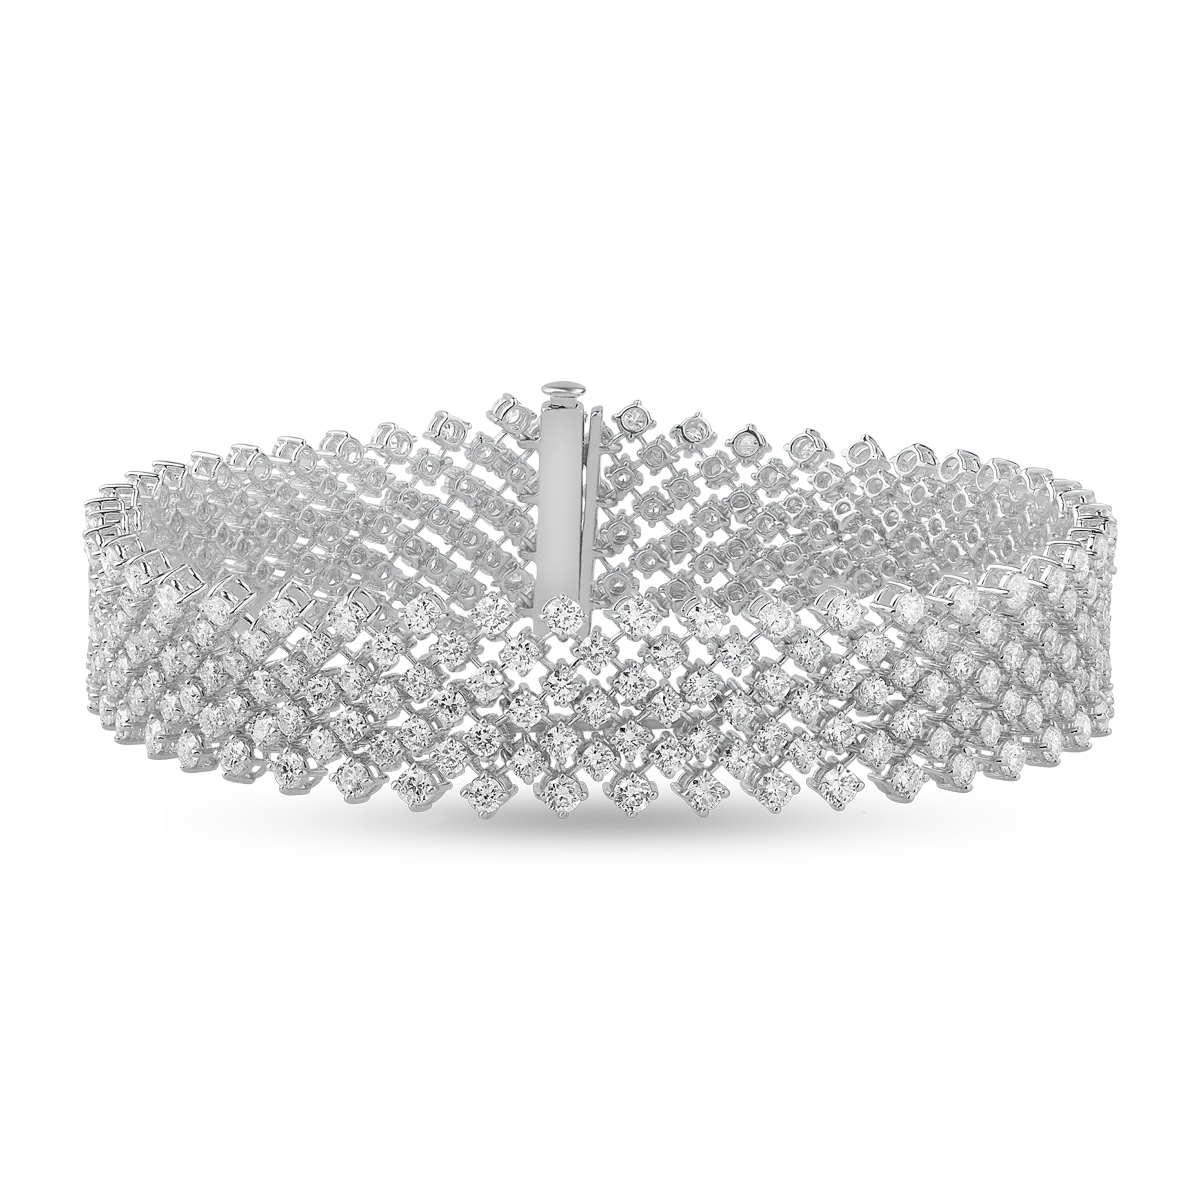 18K white gold bracelet with 9.3ct diamonds